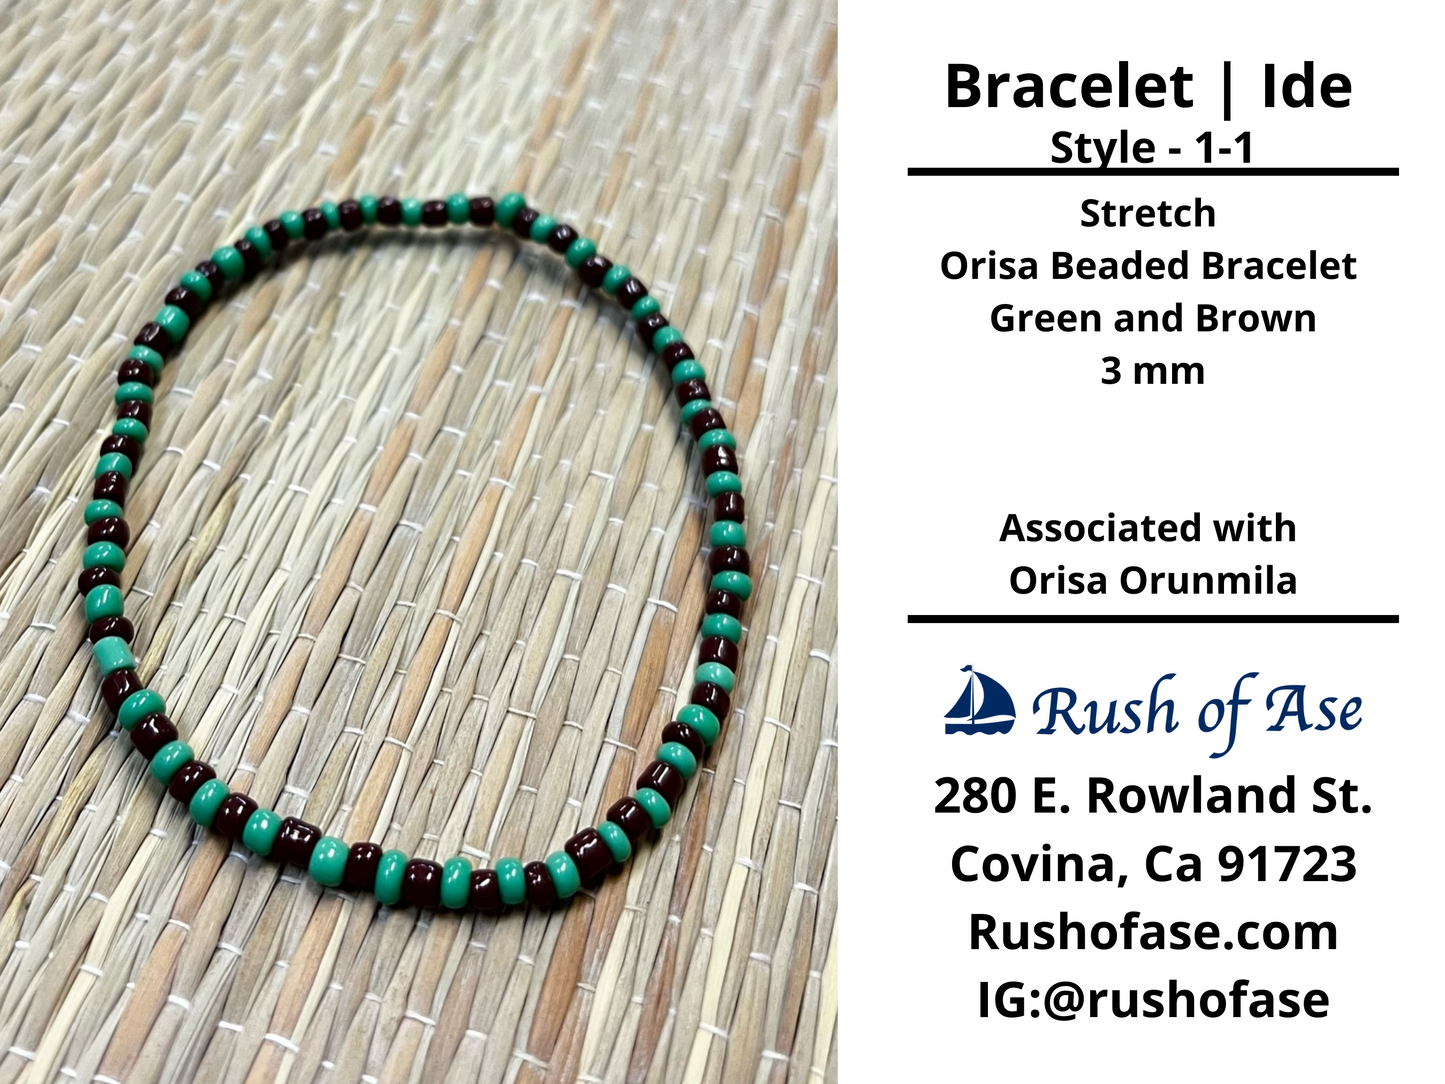 Bracelet | Ide | Stretch Bracelet - Small Beads – 3mm – Green and Brown | Orunmila – Style 1-1